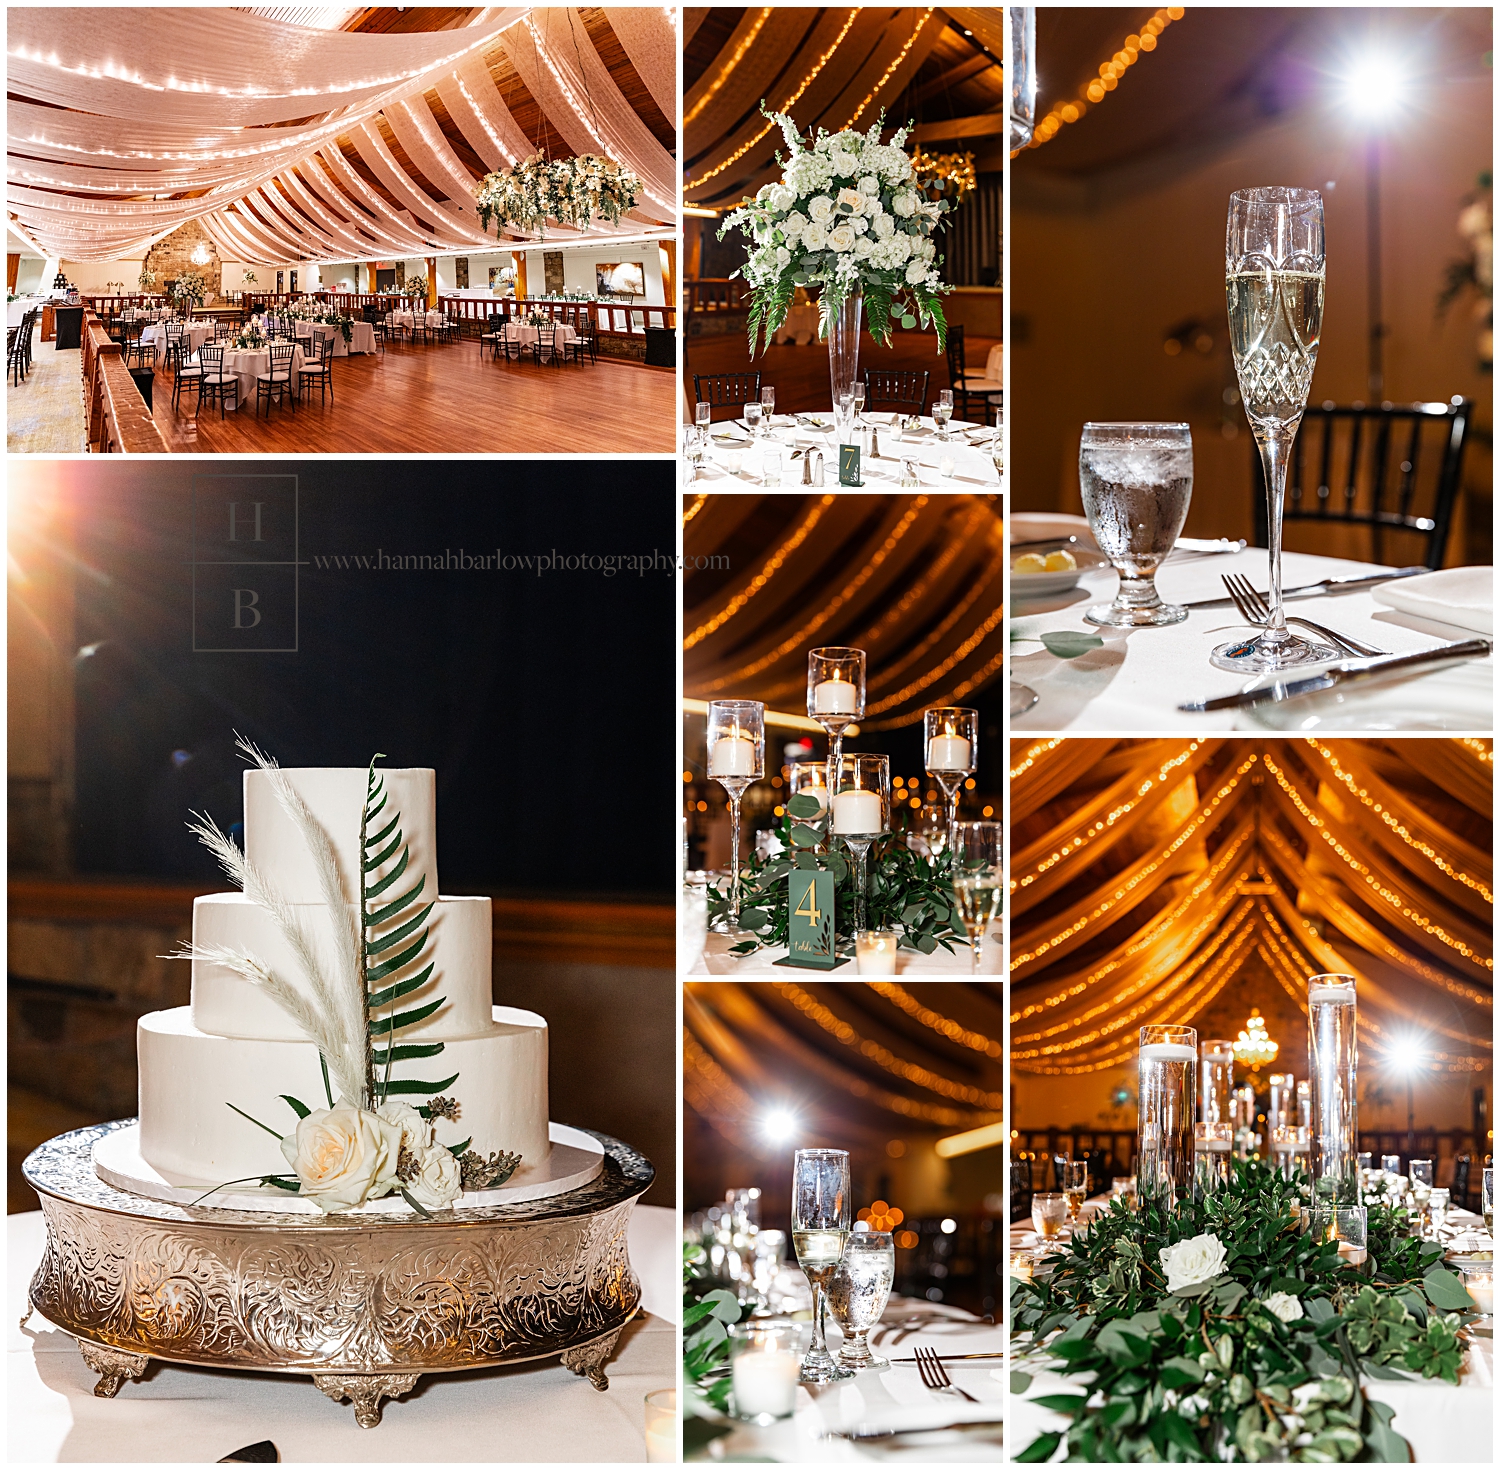 Warm gold wedding reception details are featured